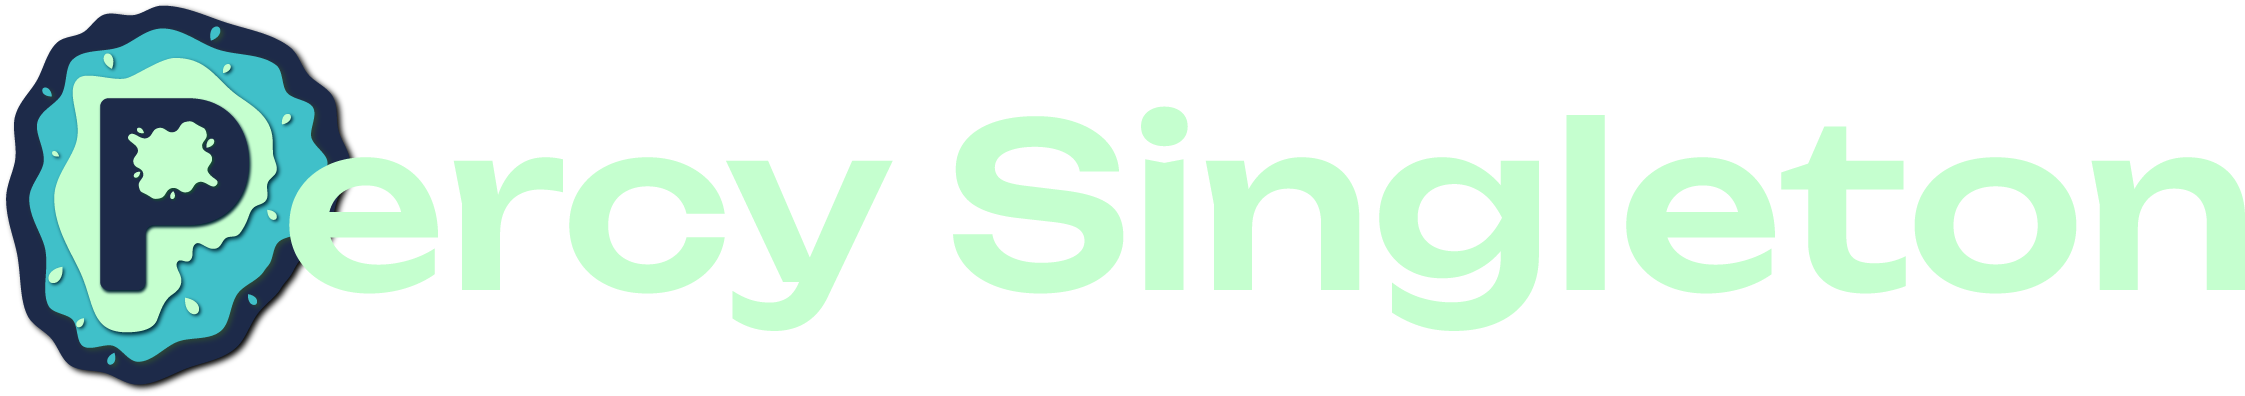 wordmark logo reading 'Percy Singleton'